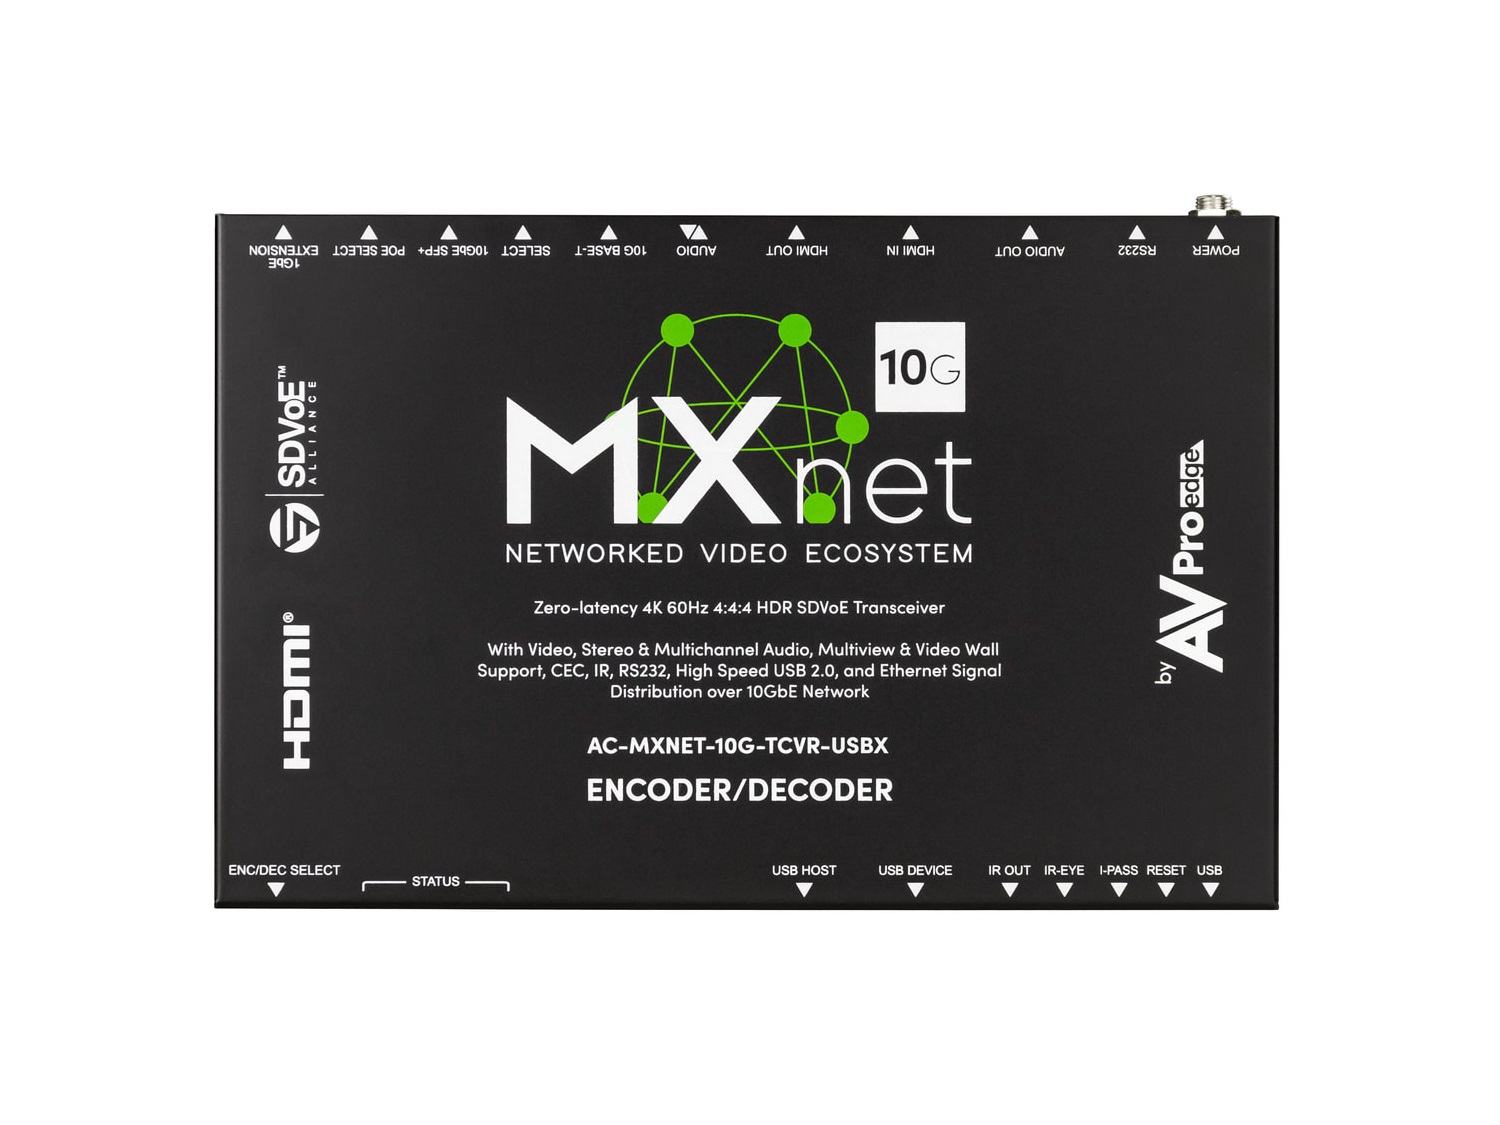 AC-MXNET-10G-TCVR-USBX MXNet 10G Transceiver Encoder/Decoder Unit with Icron Technologies/ExtremeUSB by AVPro Edge